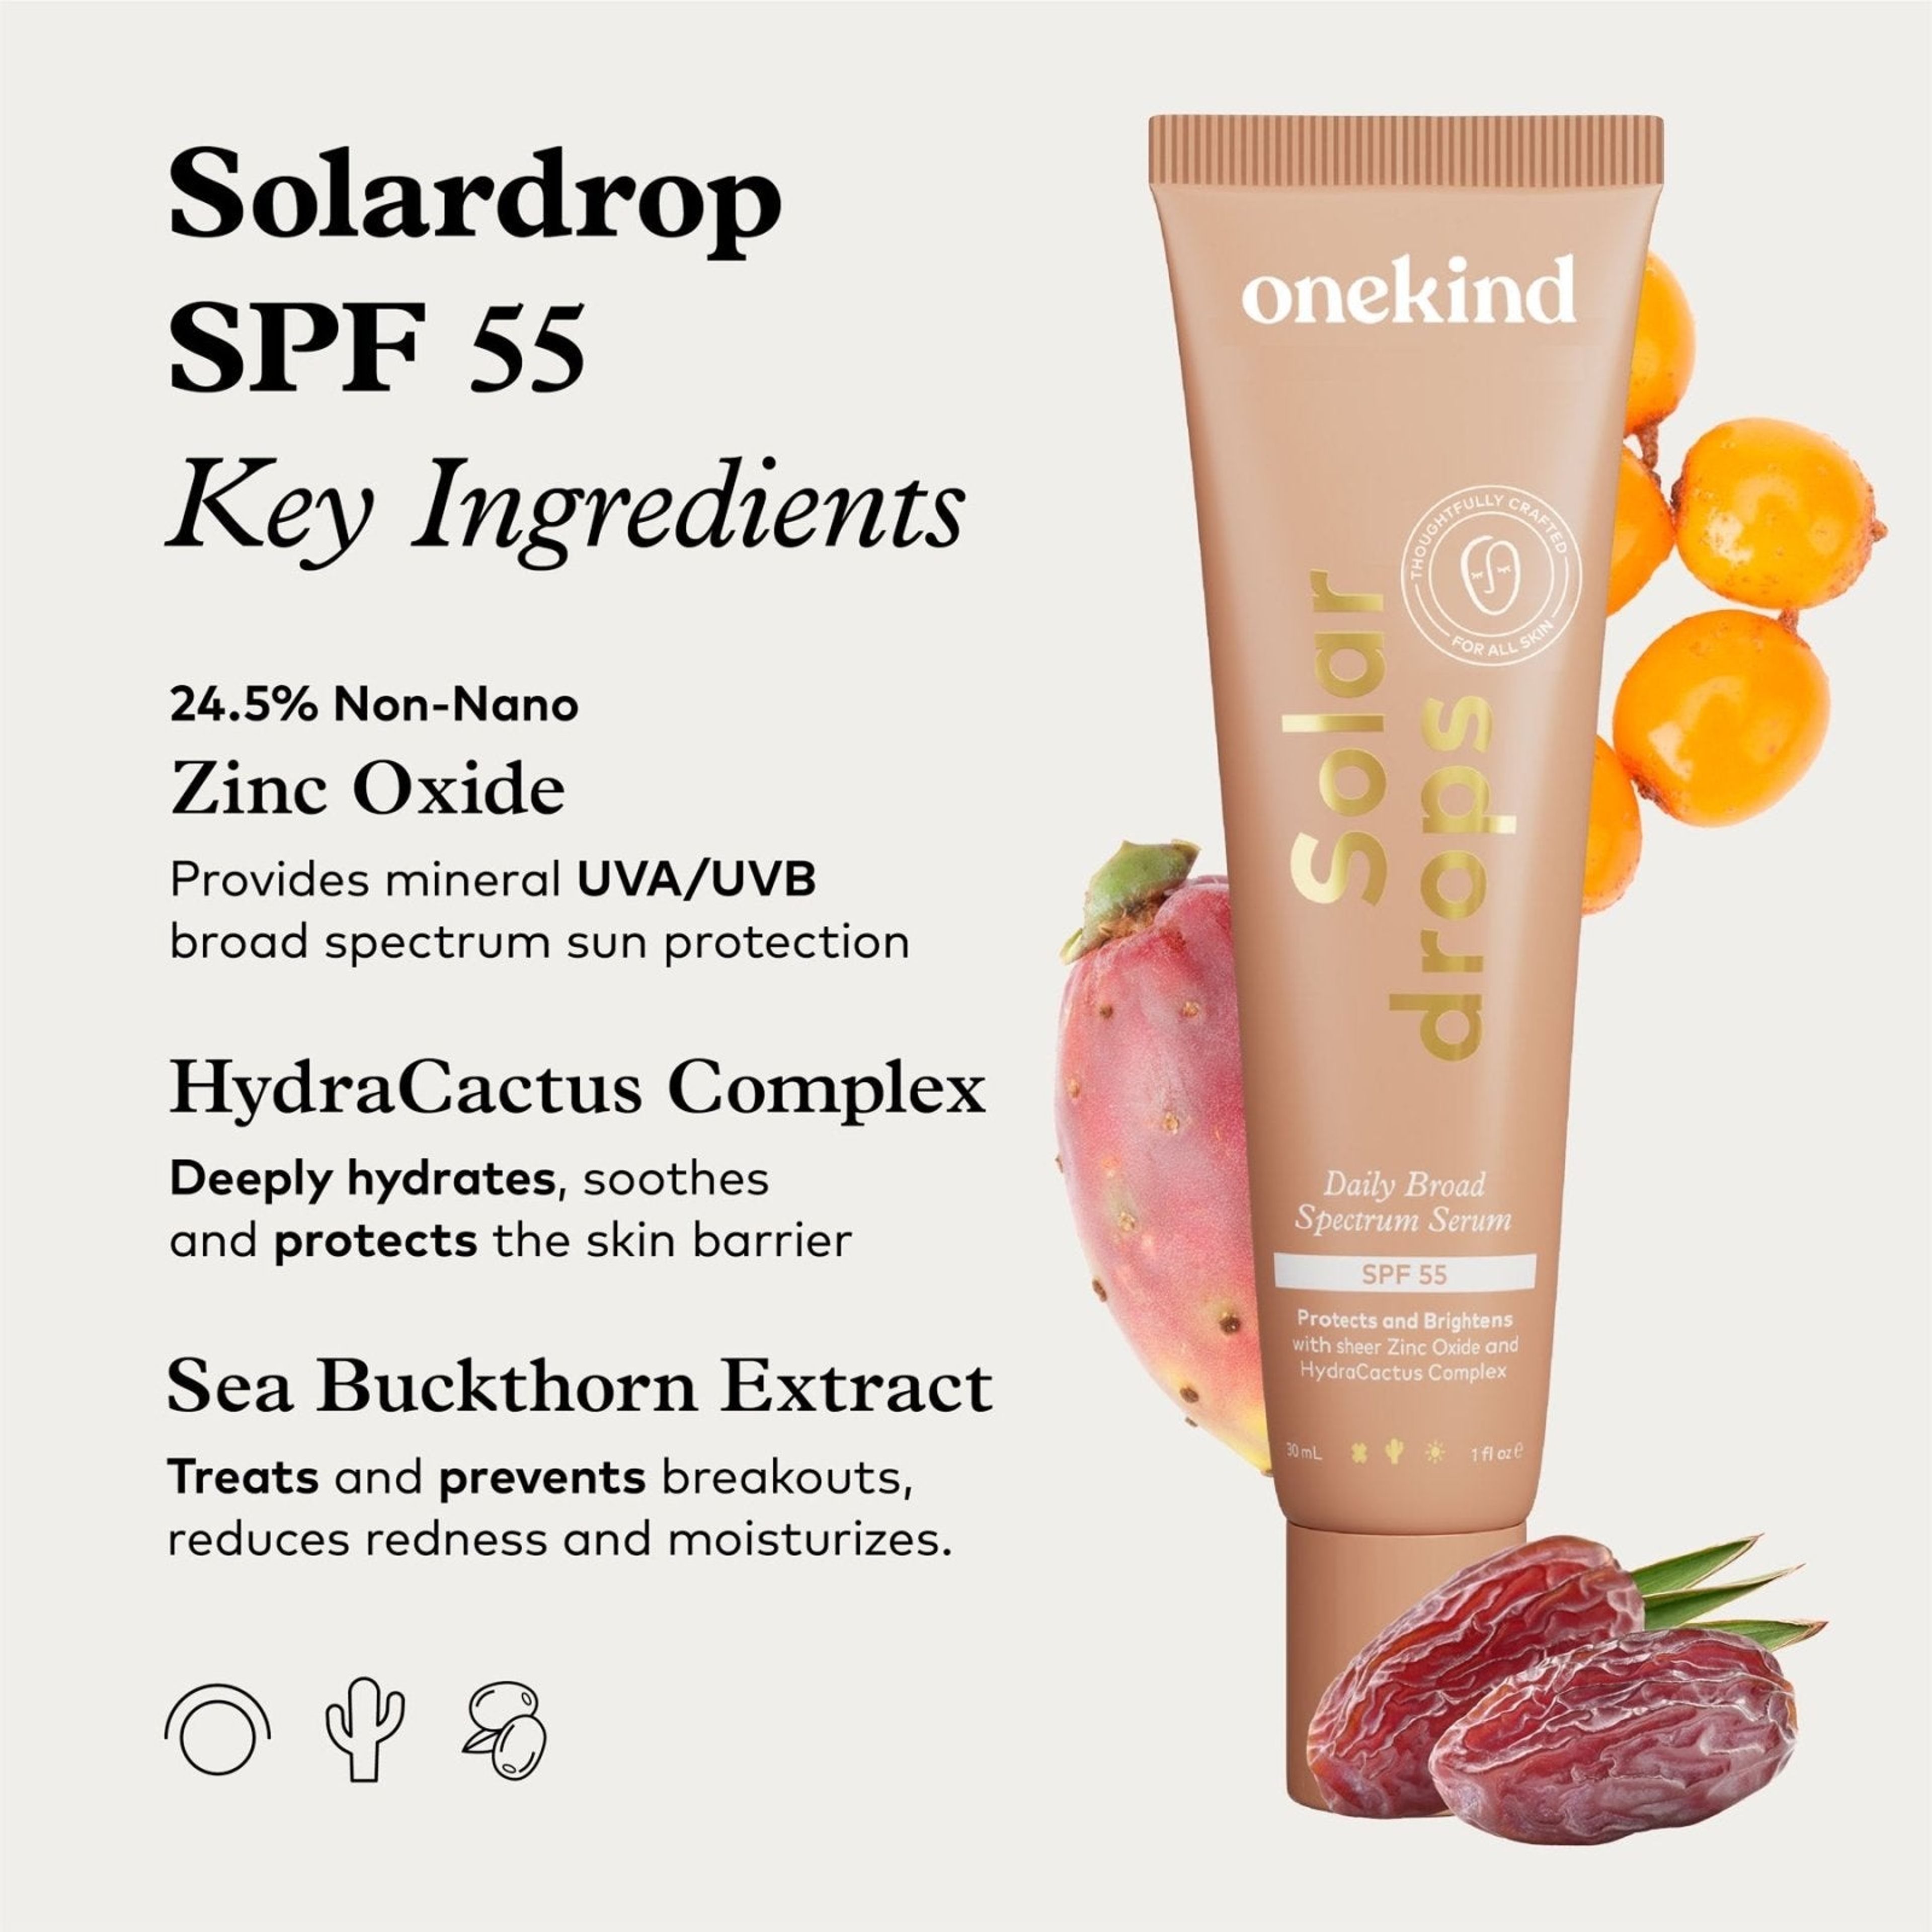 Solardrops SPF 55 Daily Broad Spectrum Serum